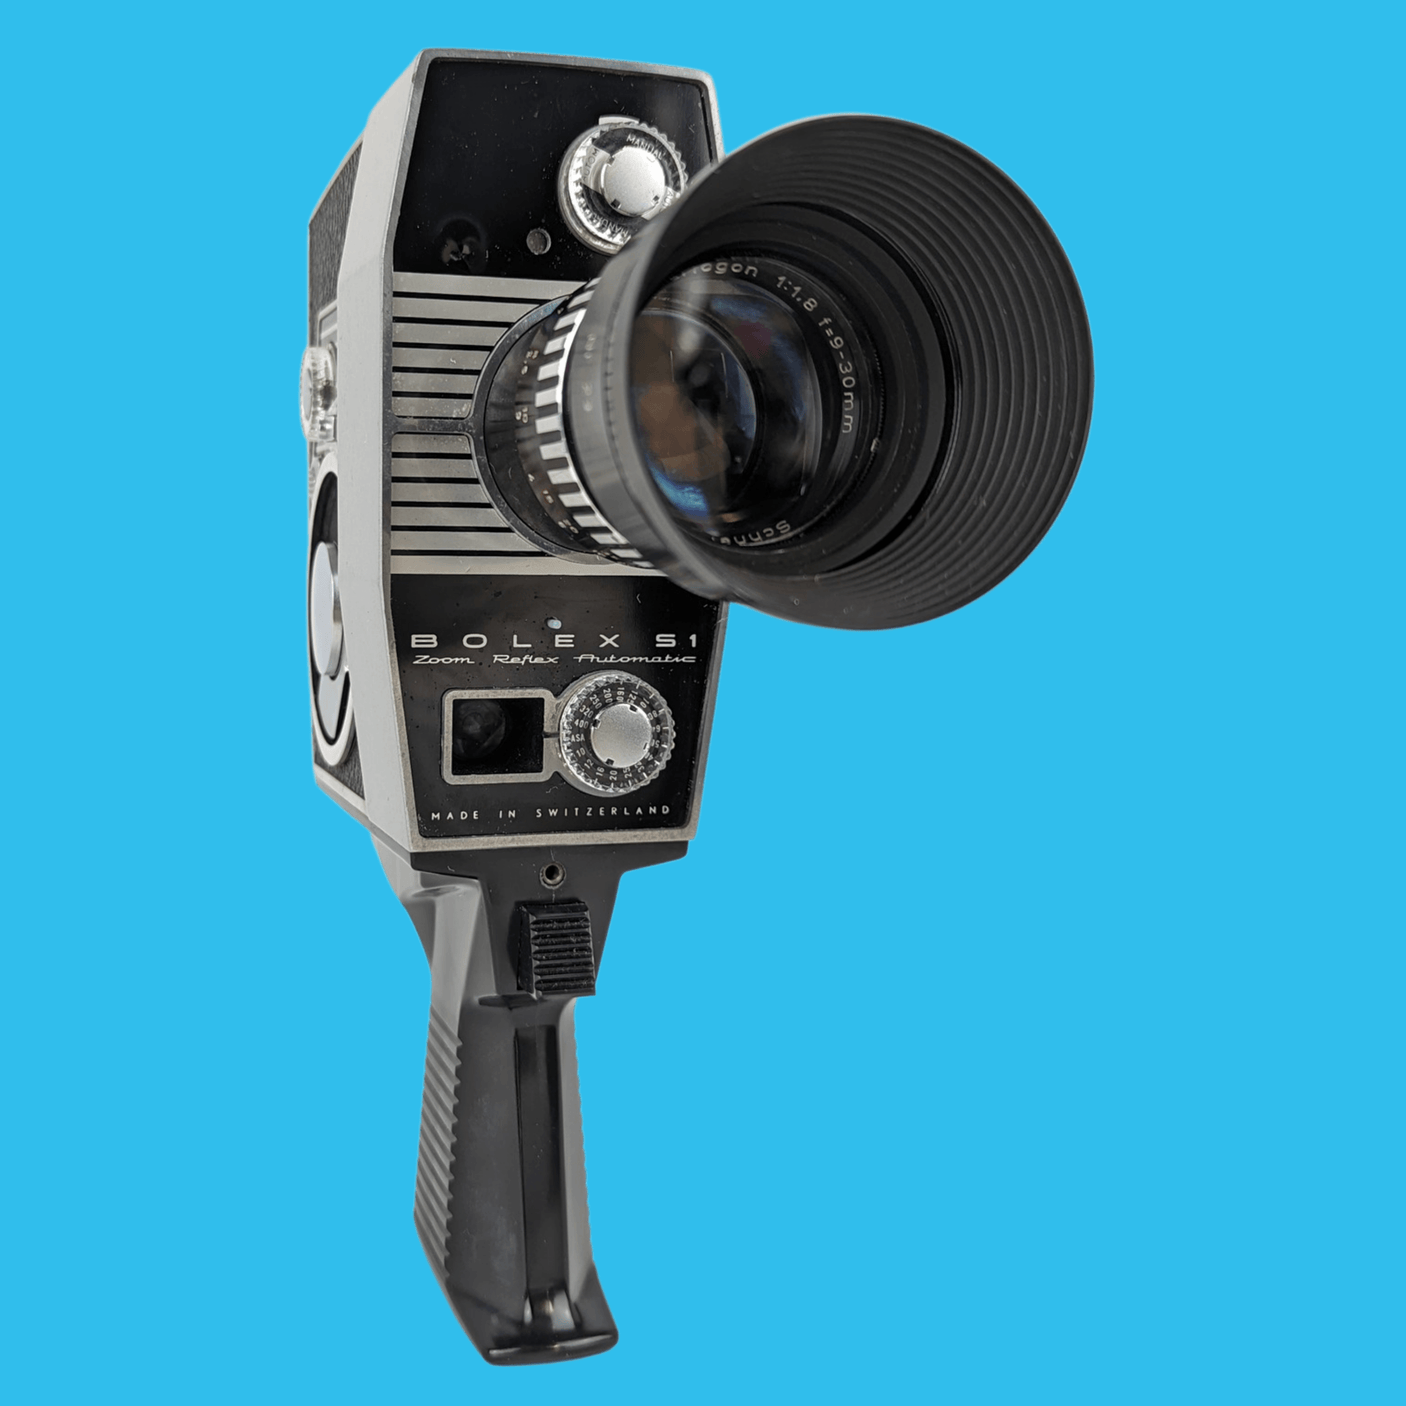 Bolex S1 Zoom Reflex Automatic 8mm Movie Cine Camera